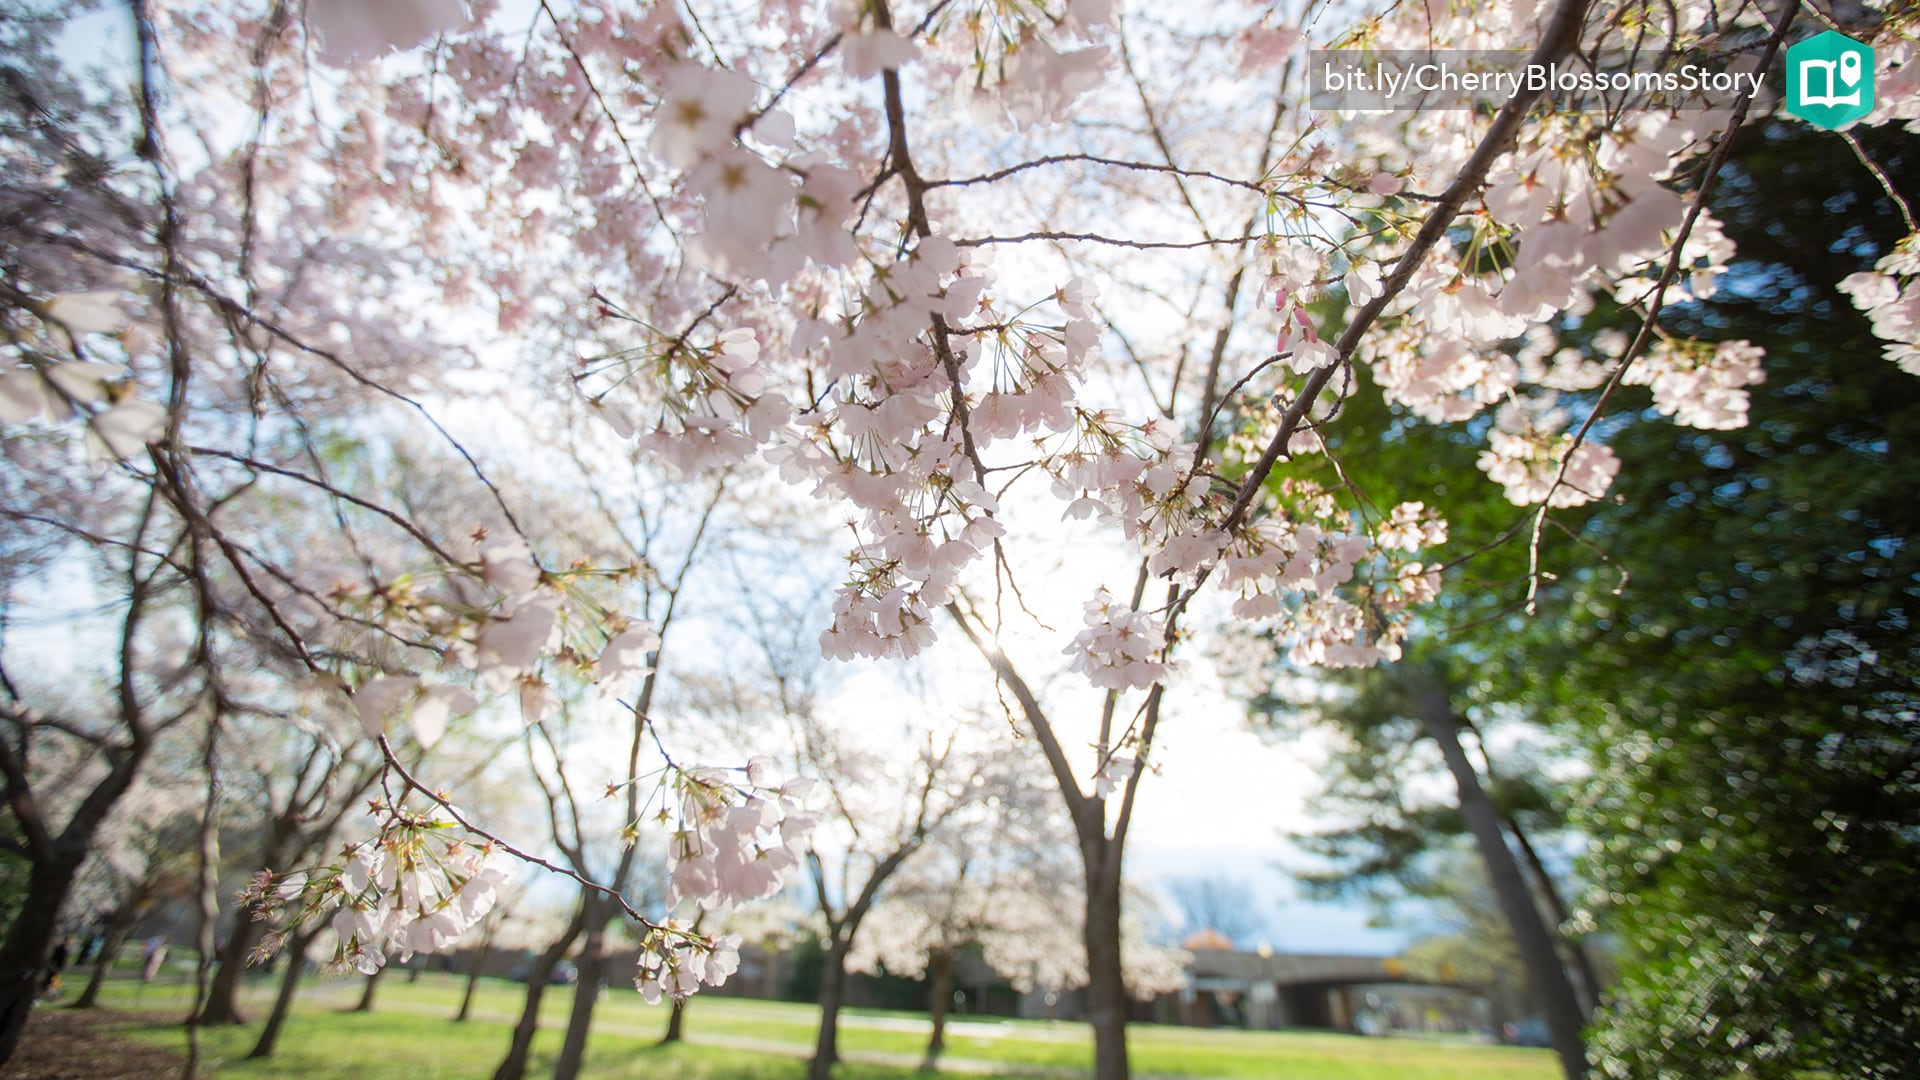 The Cherry Blossoms of Washington, D.C.